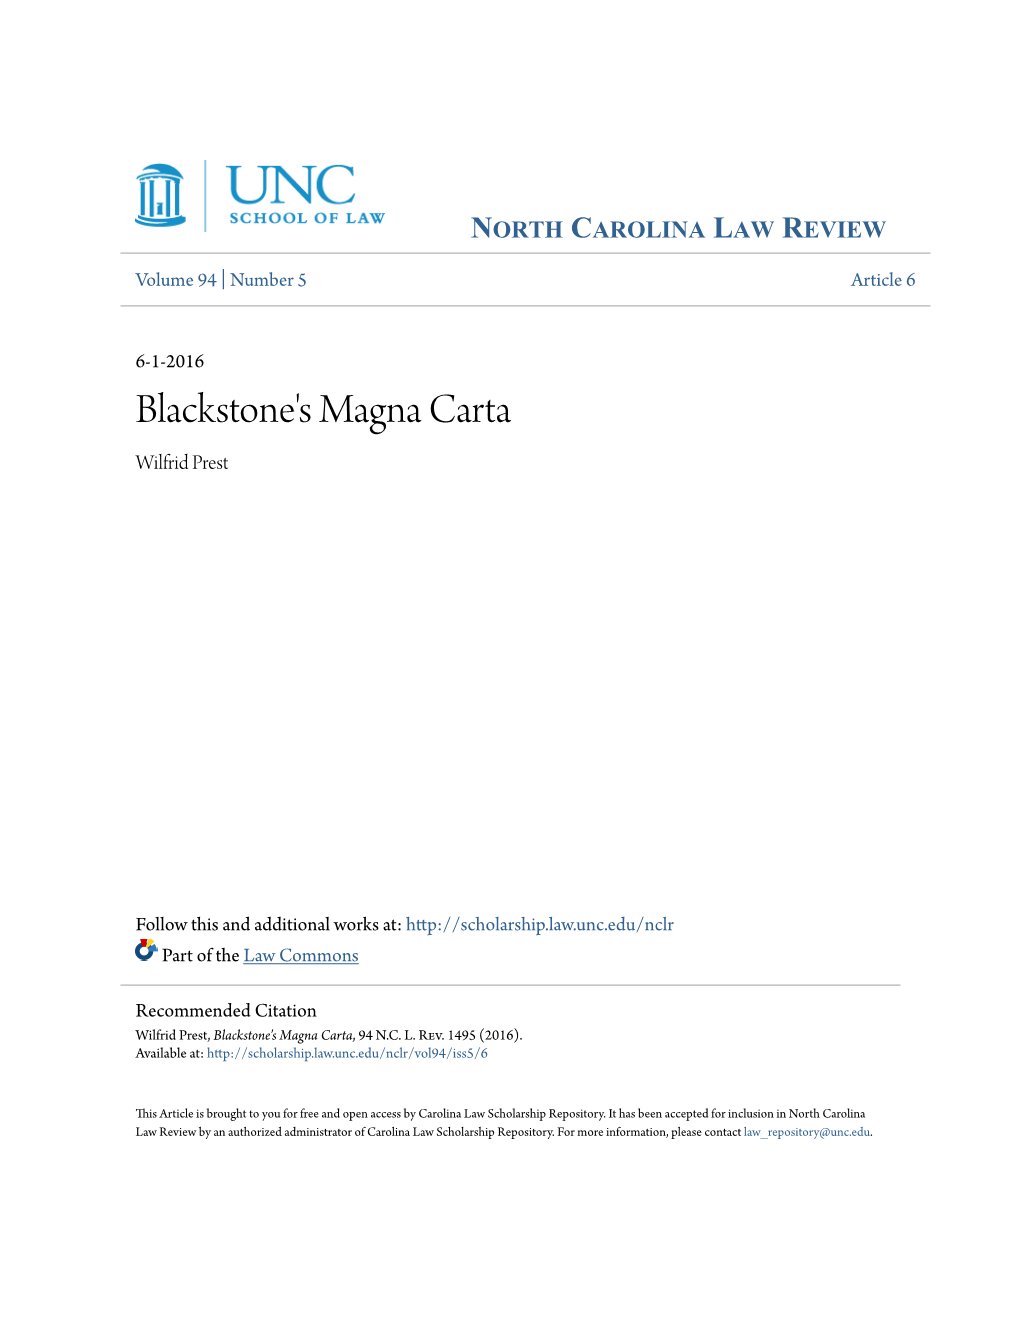 Blackstone's Magna Carta Wilfrid Prest